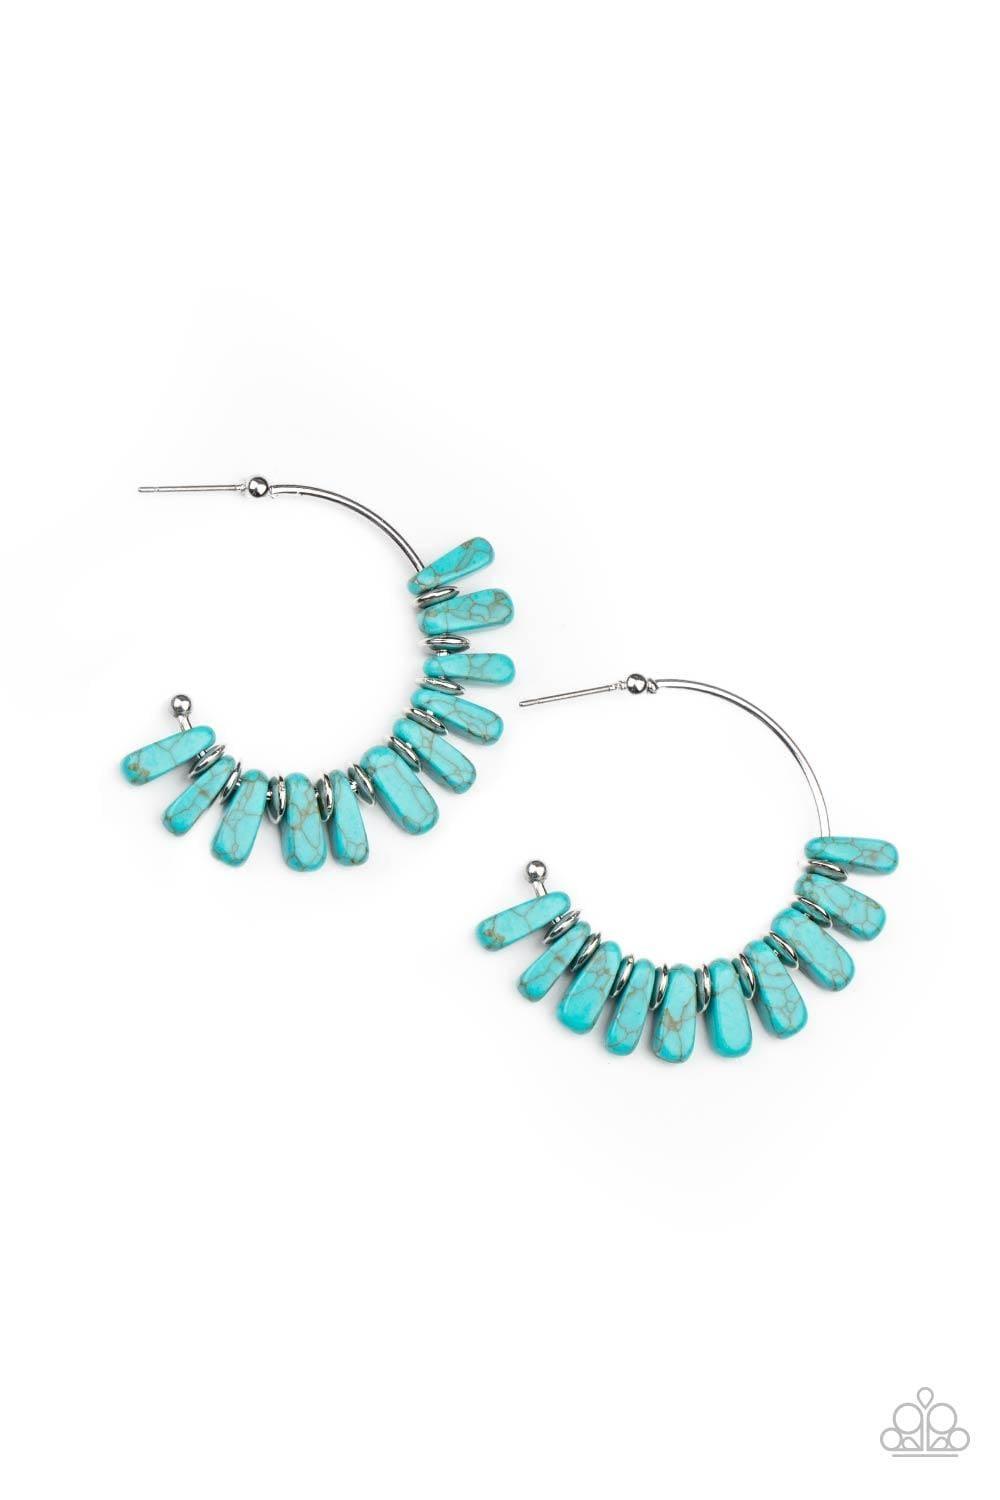 Paparazzi Accessories - Poshly Primitive - Blue (turquoise) Hoop Earrings - Bling by JessieK